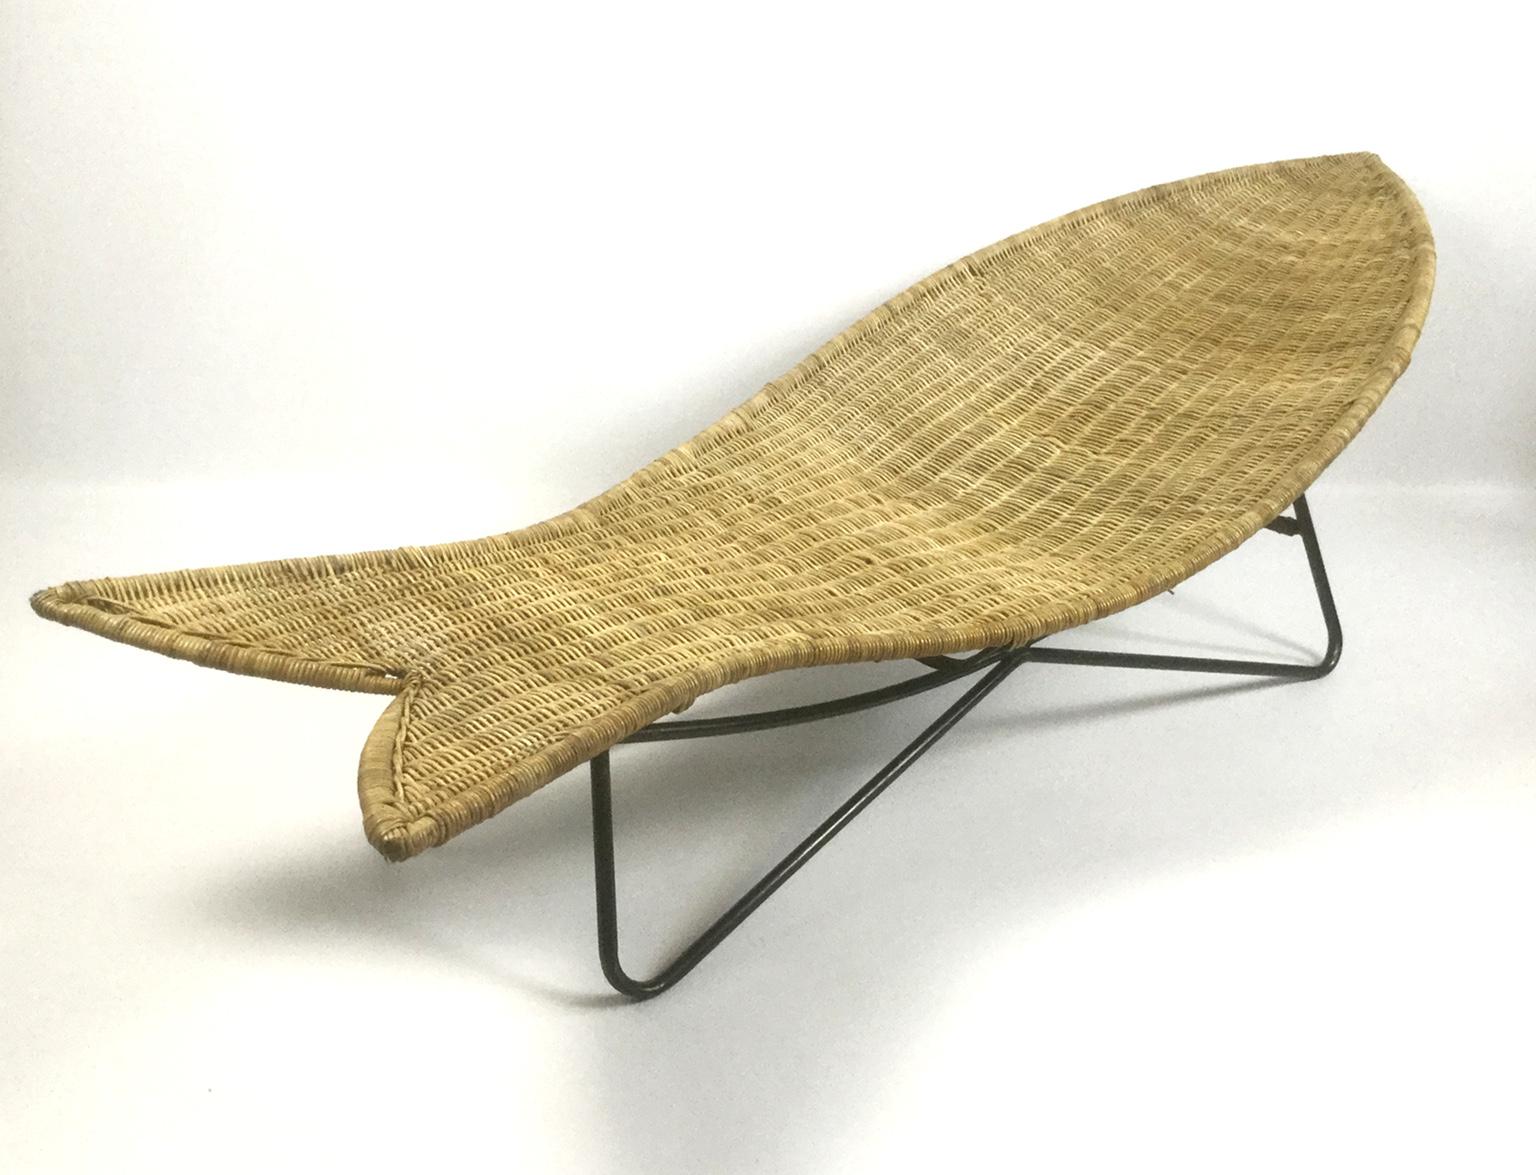 Metalwork Fish Shaped Wicker Lounge Chair Attributed to Lina Zervudaki, 1940s